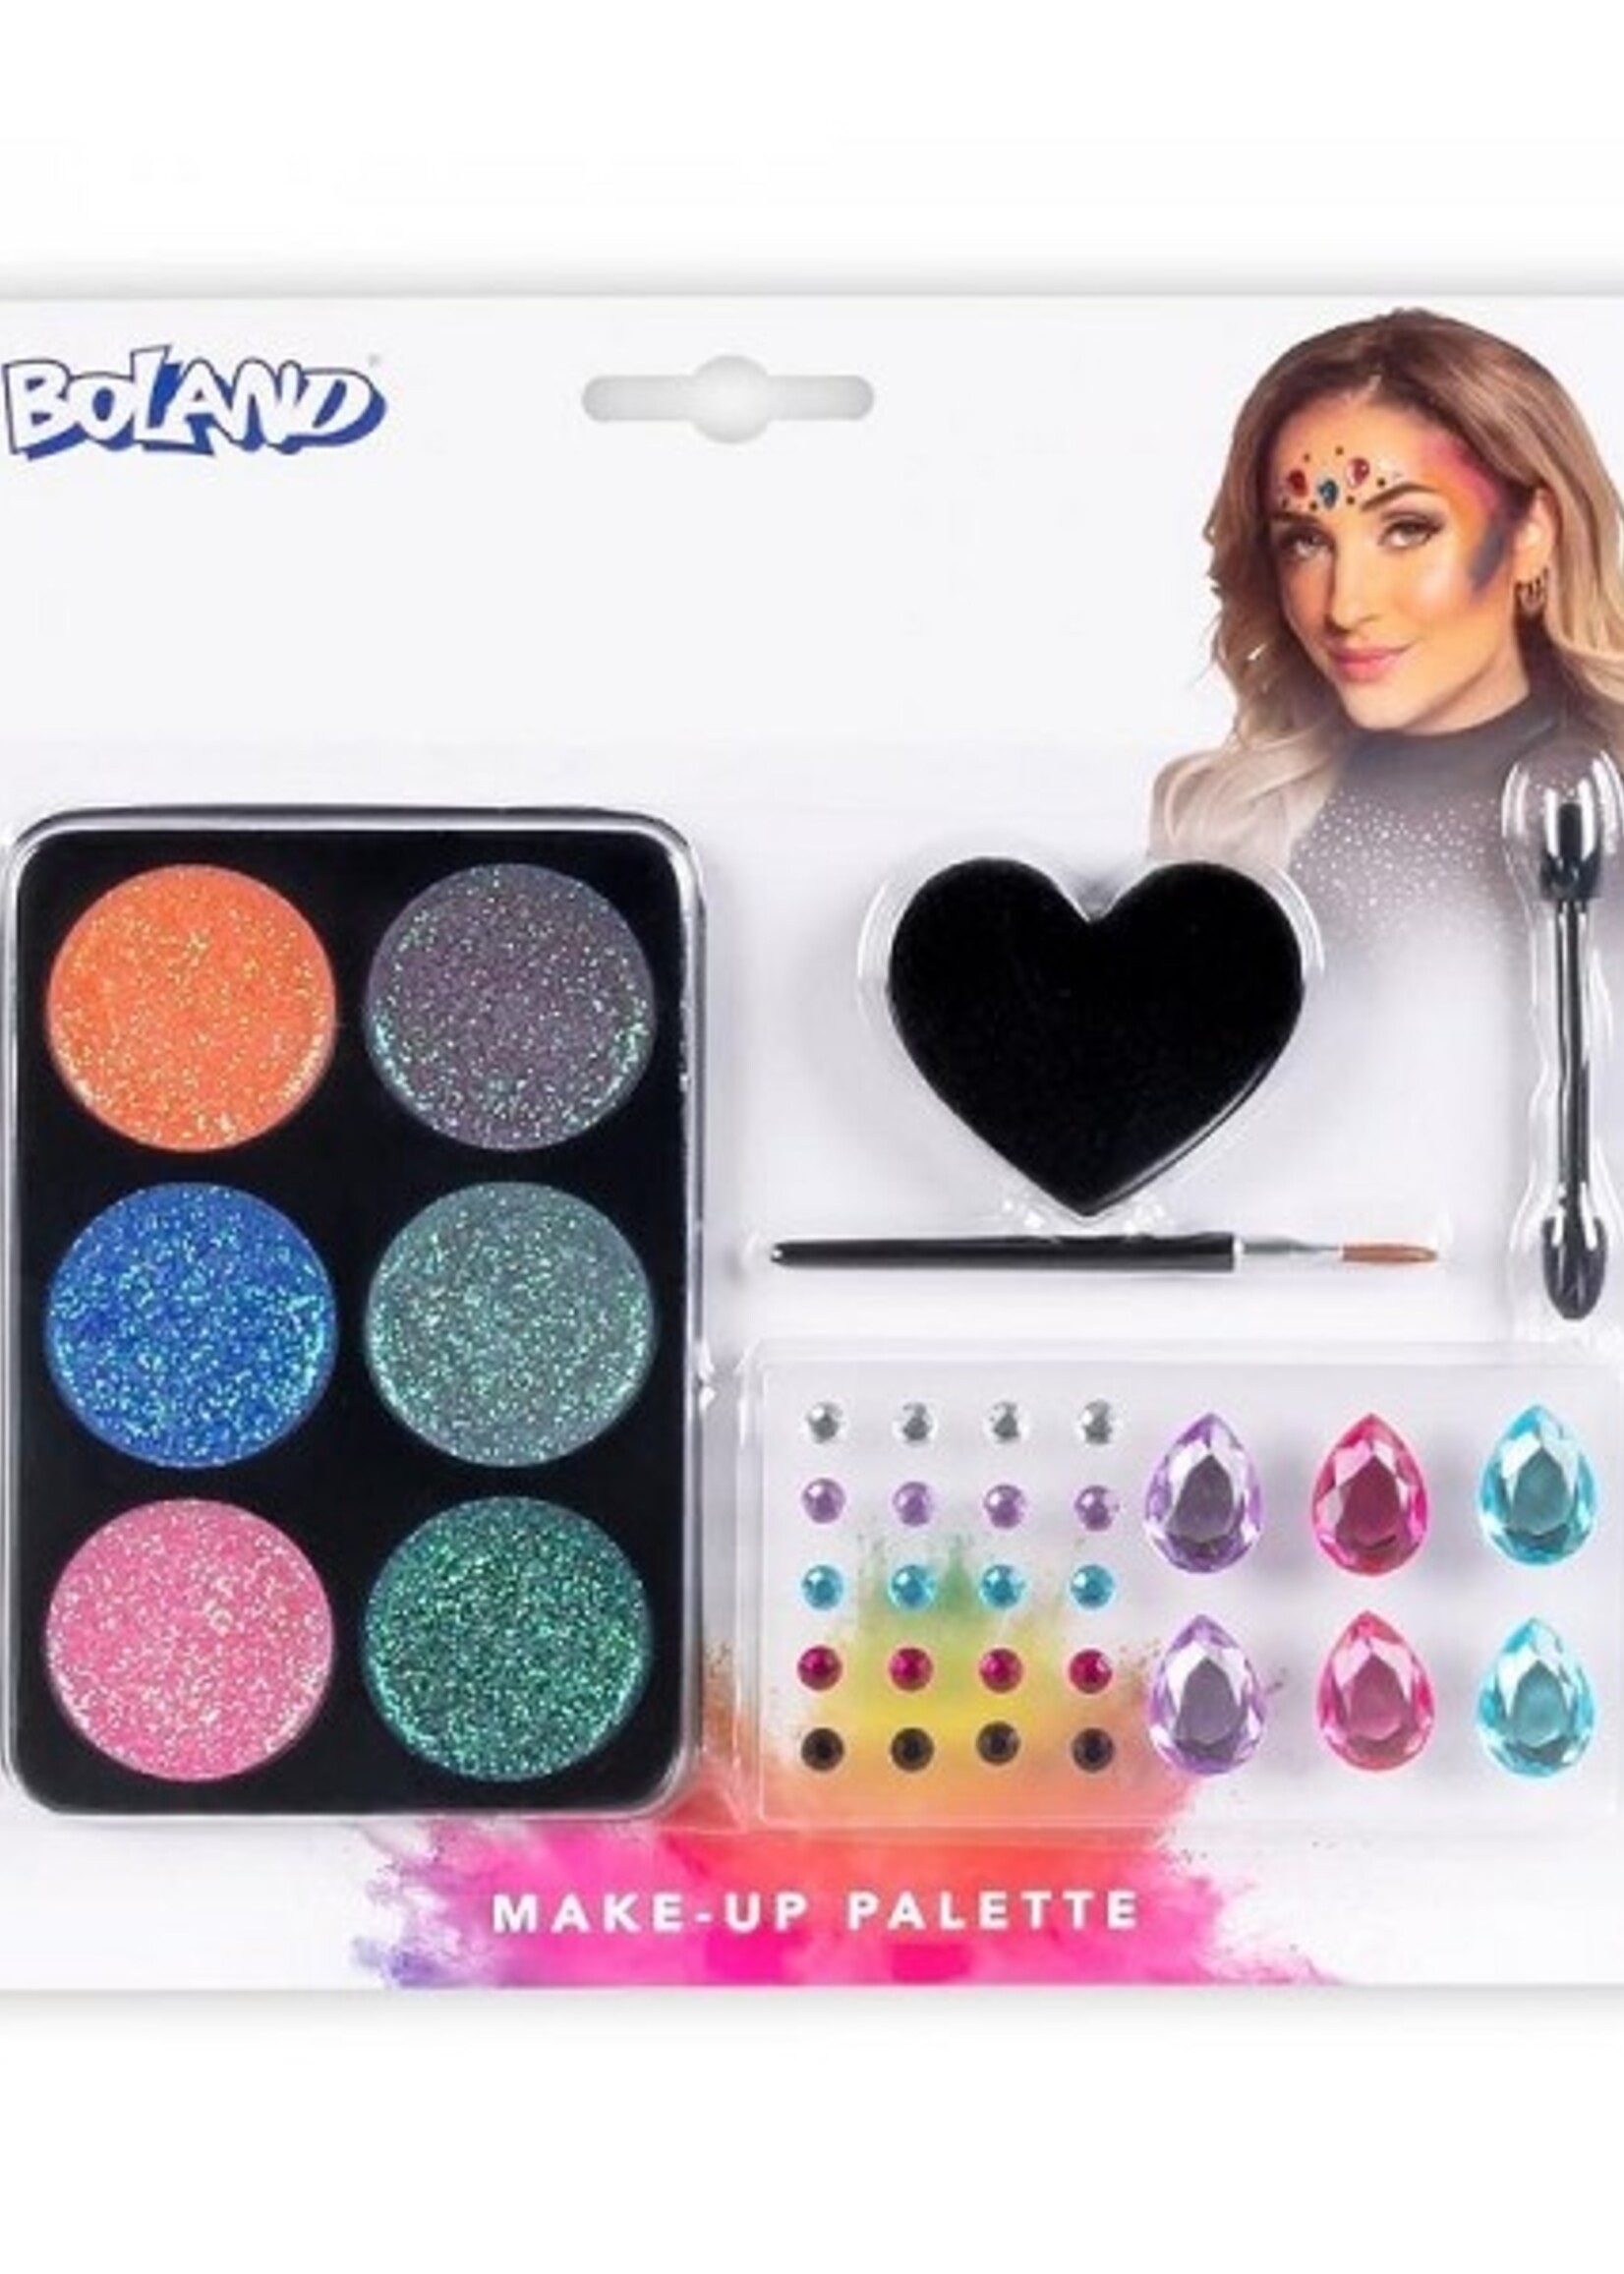 Make-up set Glamour met 26 sticker edelstenen, glittersmink, spons, pensel en applicator